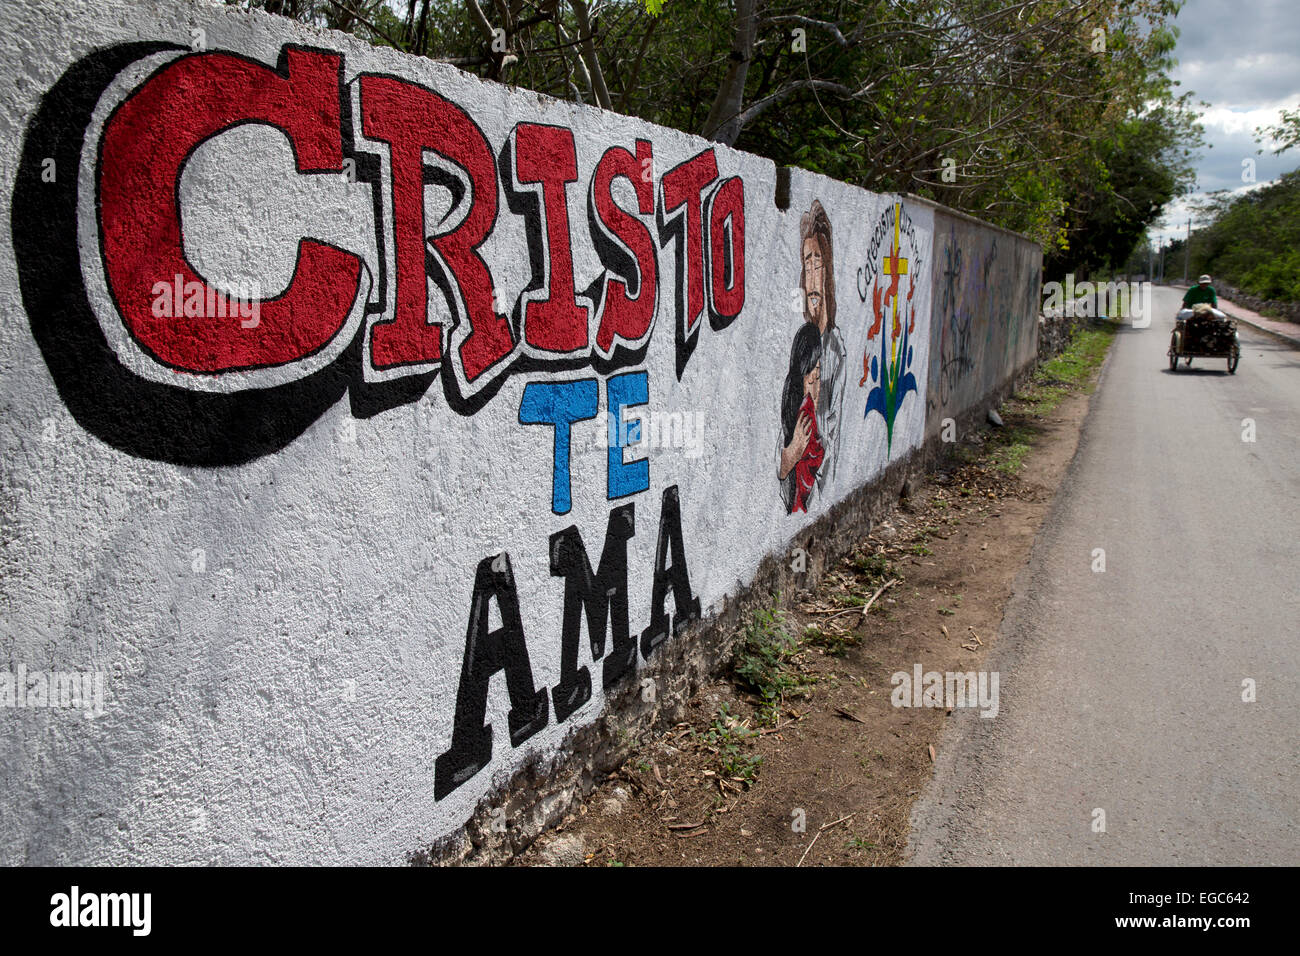 L'art de mur, Yucatan, Mexique Banque D'Images